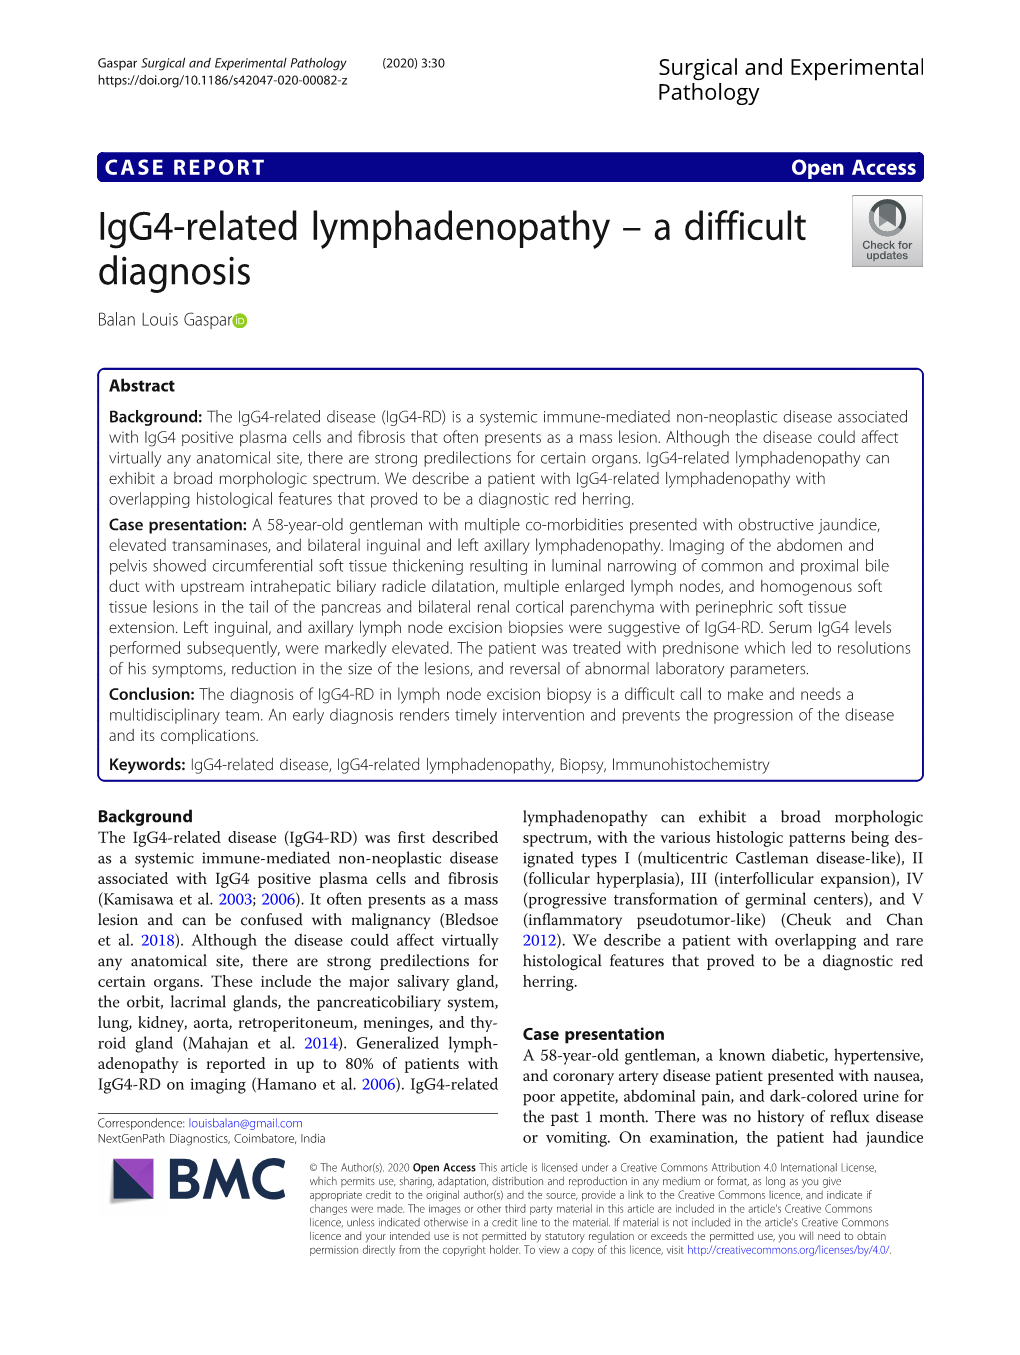 Igg4-Related Lymphadenopathy – a Difficult Diagnosis Balan Louis Gaspar